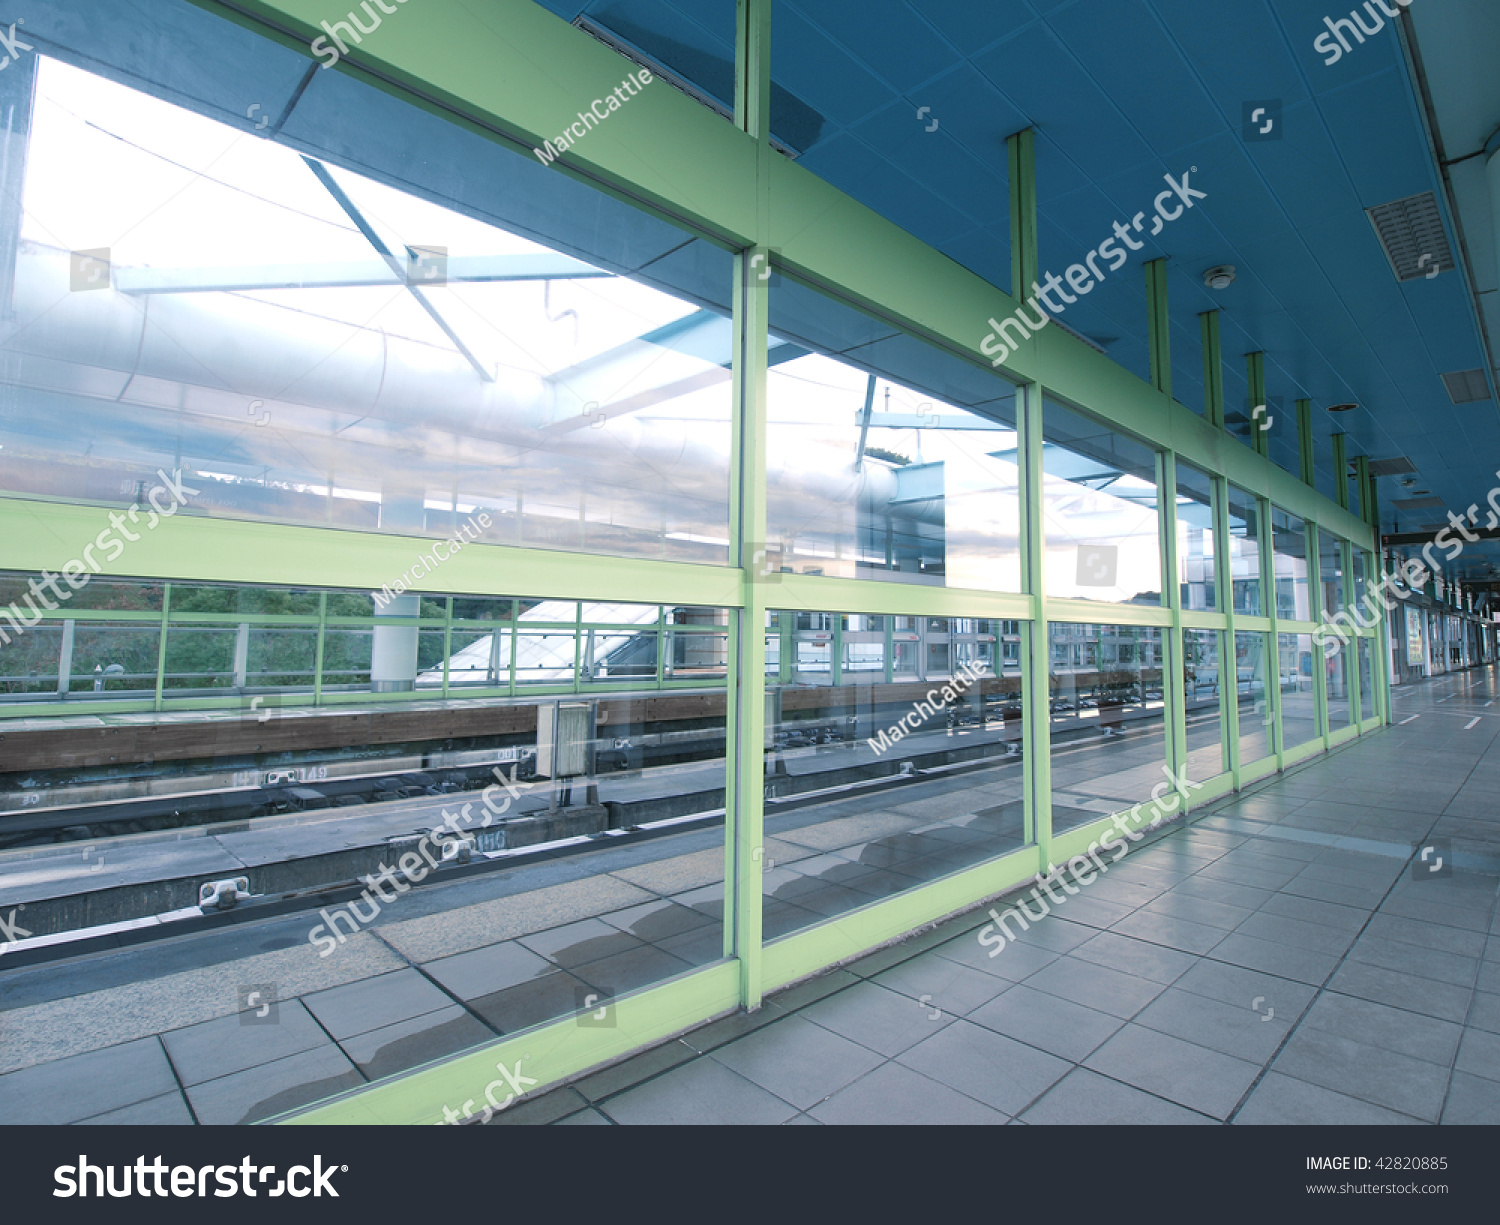 Platform Mass Rapid Transit Stock Photo 42820885 ...